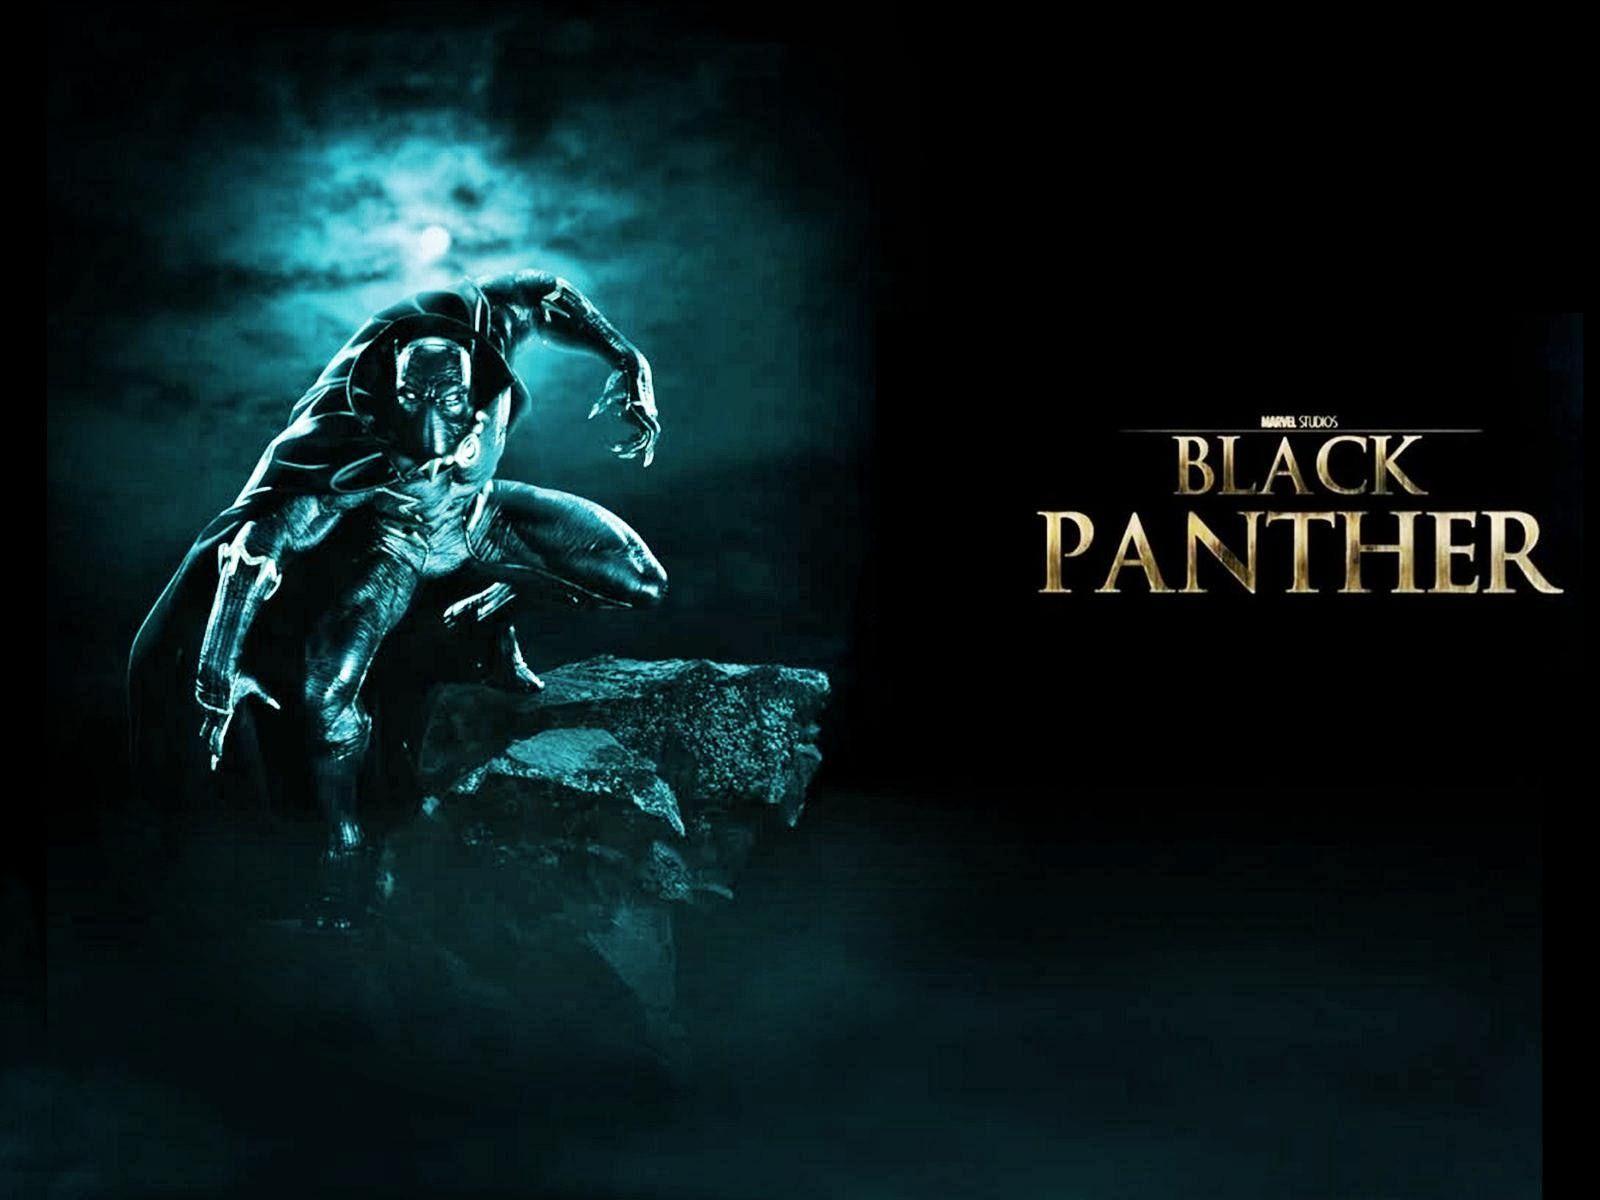 Black Panther Wallpapers, Full HDQ Black Panther Photos